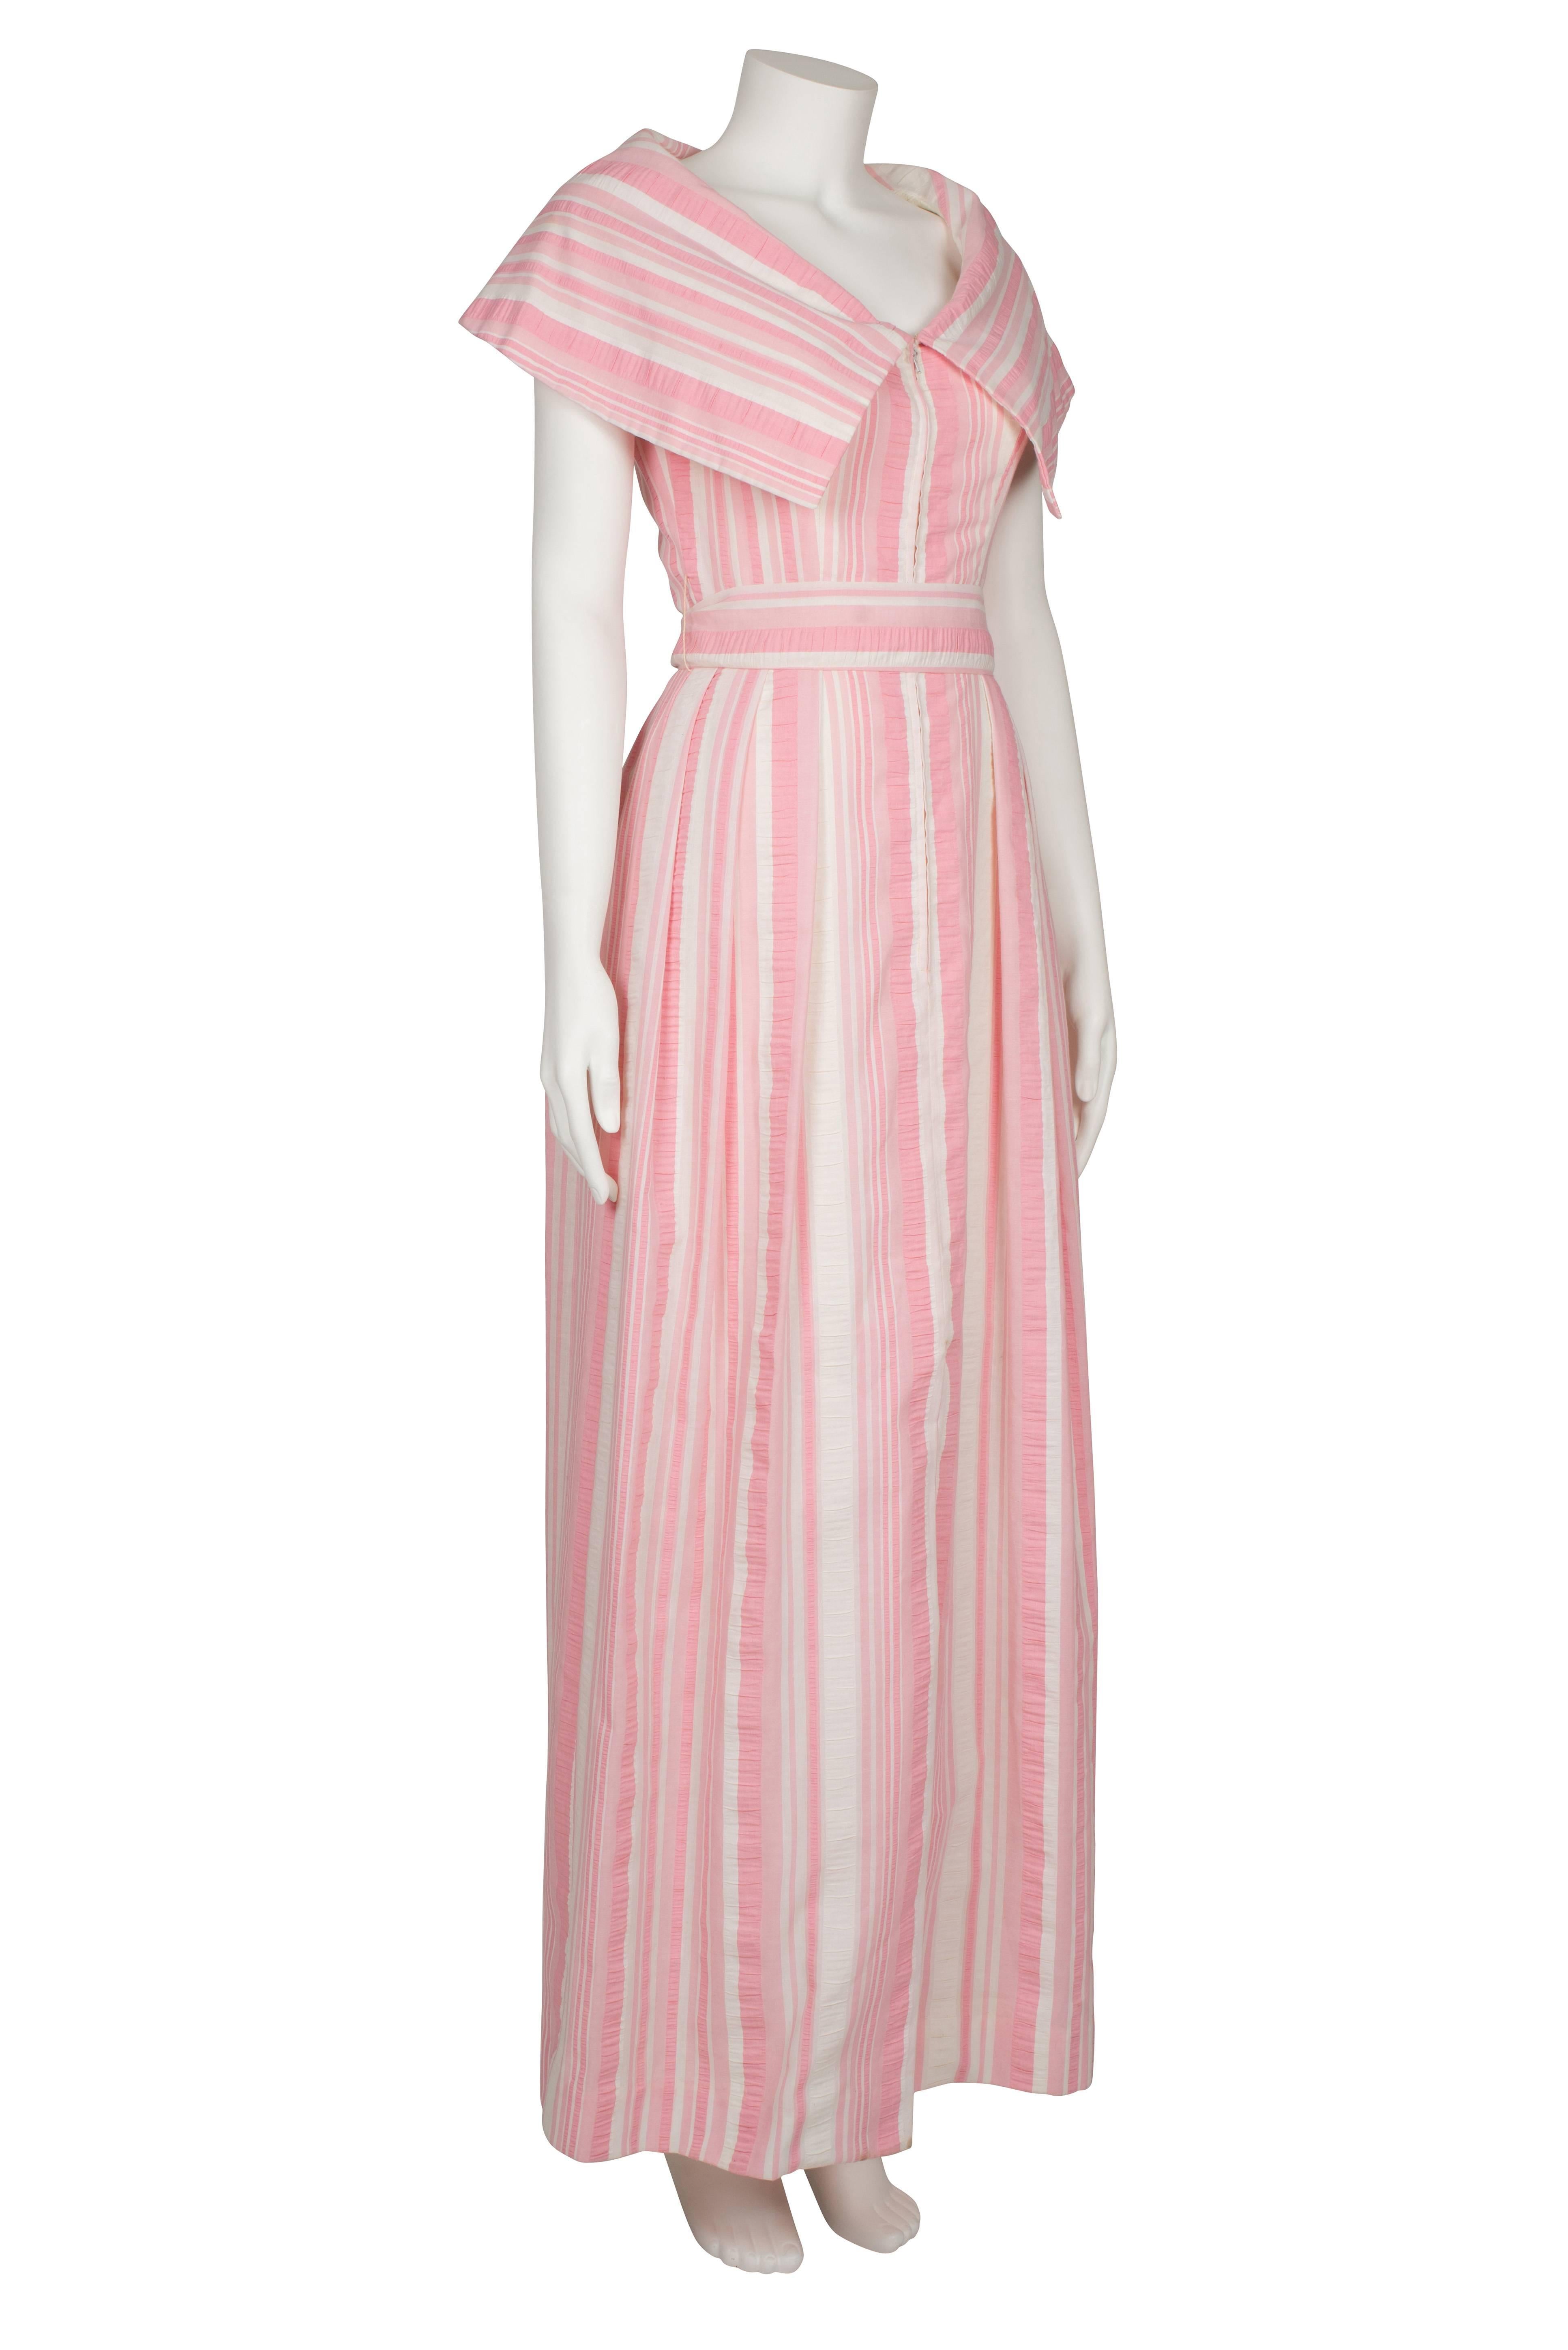 Women's 1970s Estevez Seersucker Pink and Ivory Candy Stripe Dress Size S For Sale